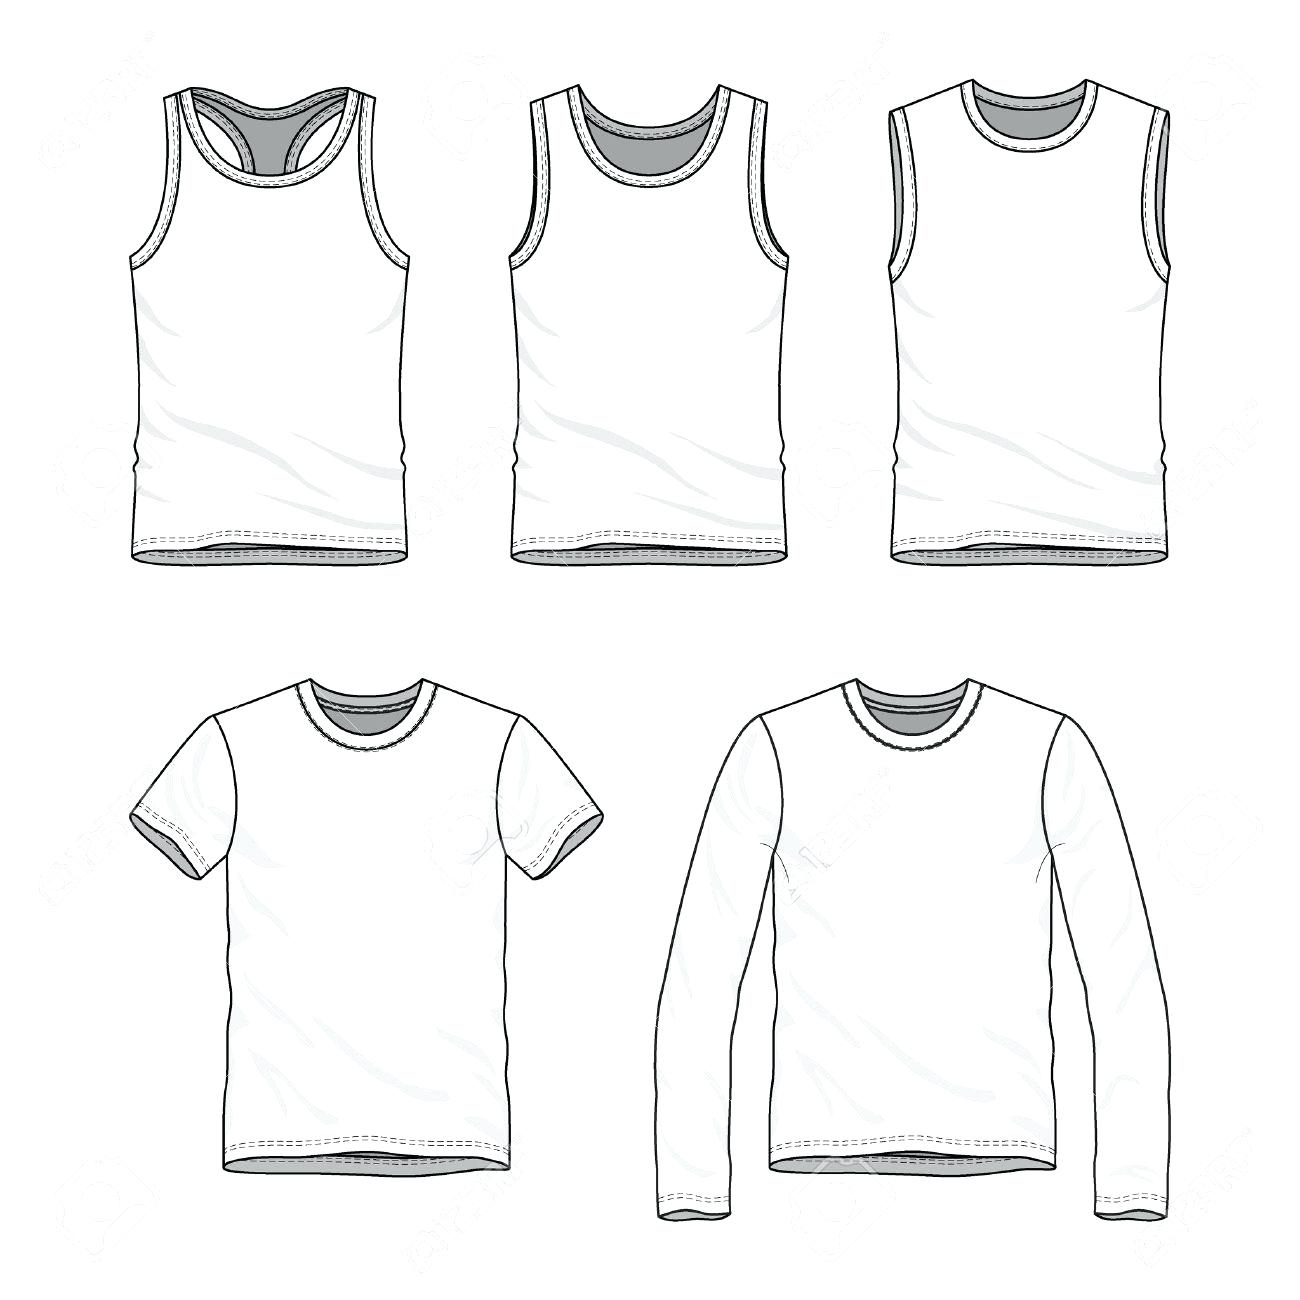 Printable blank fashion design templates - hondex